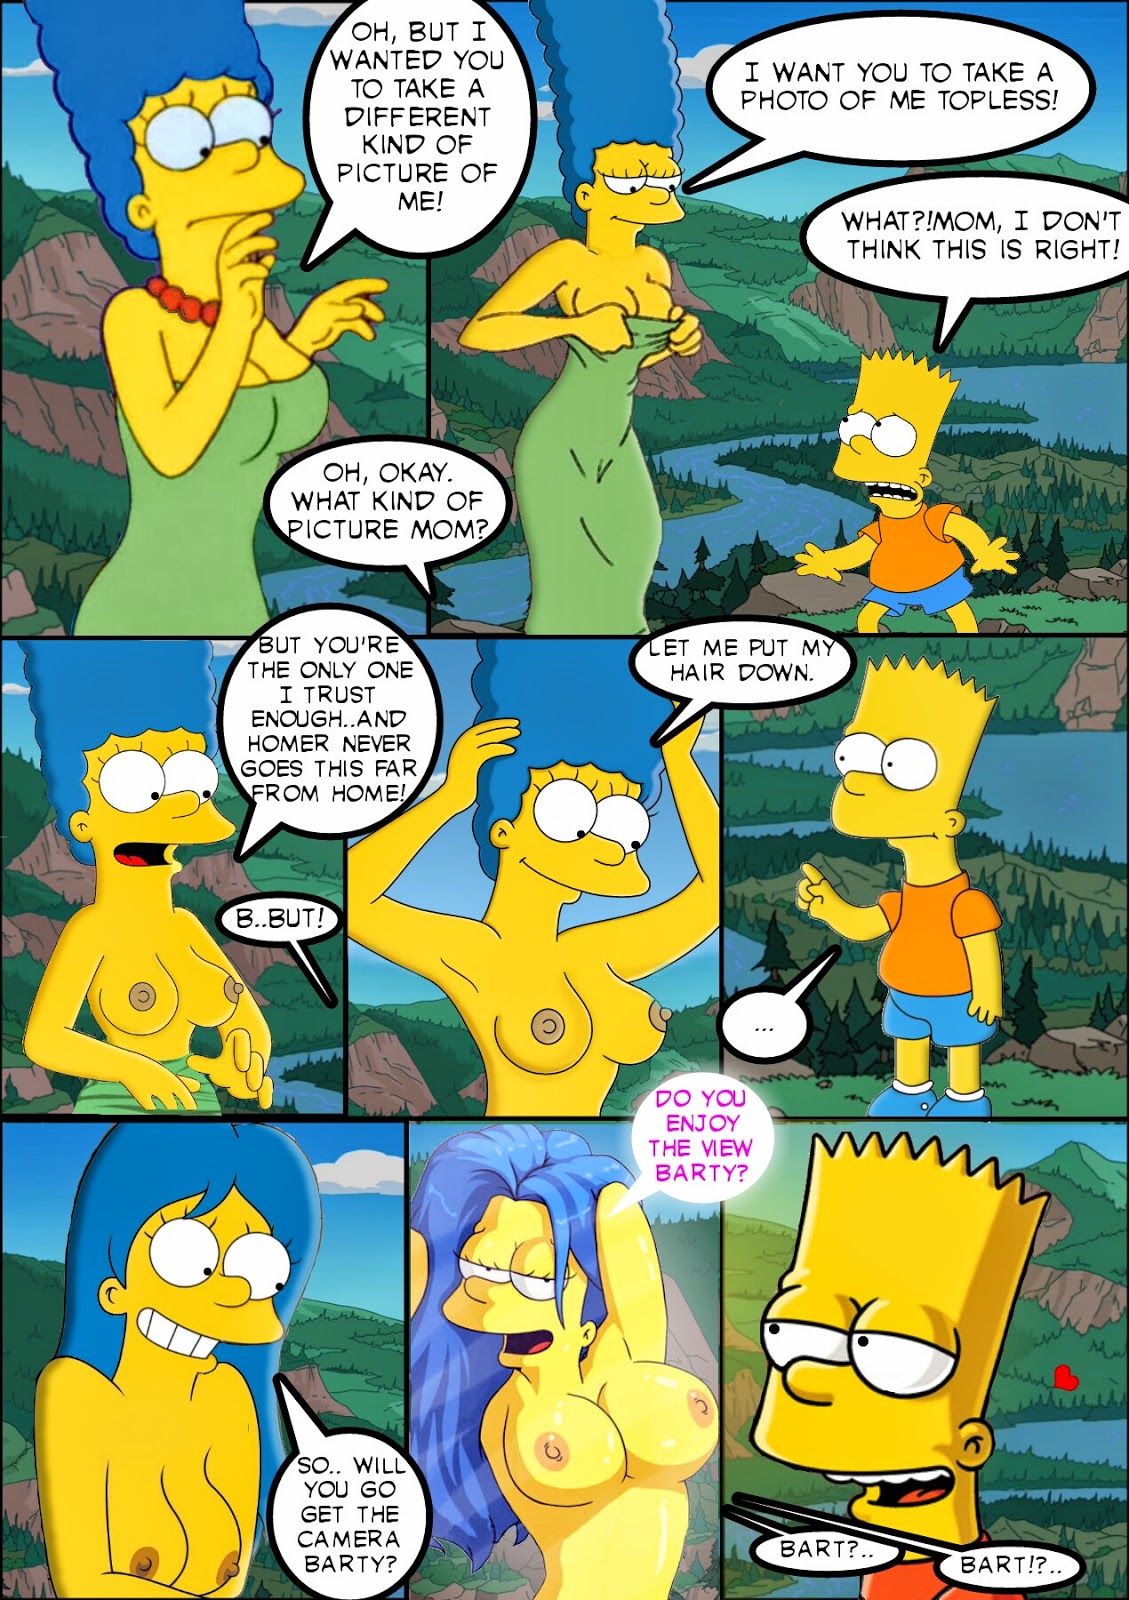 Edittoons Adult Cartoon Comics Rimo Wer The Simpsons Hot Days Jpg